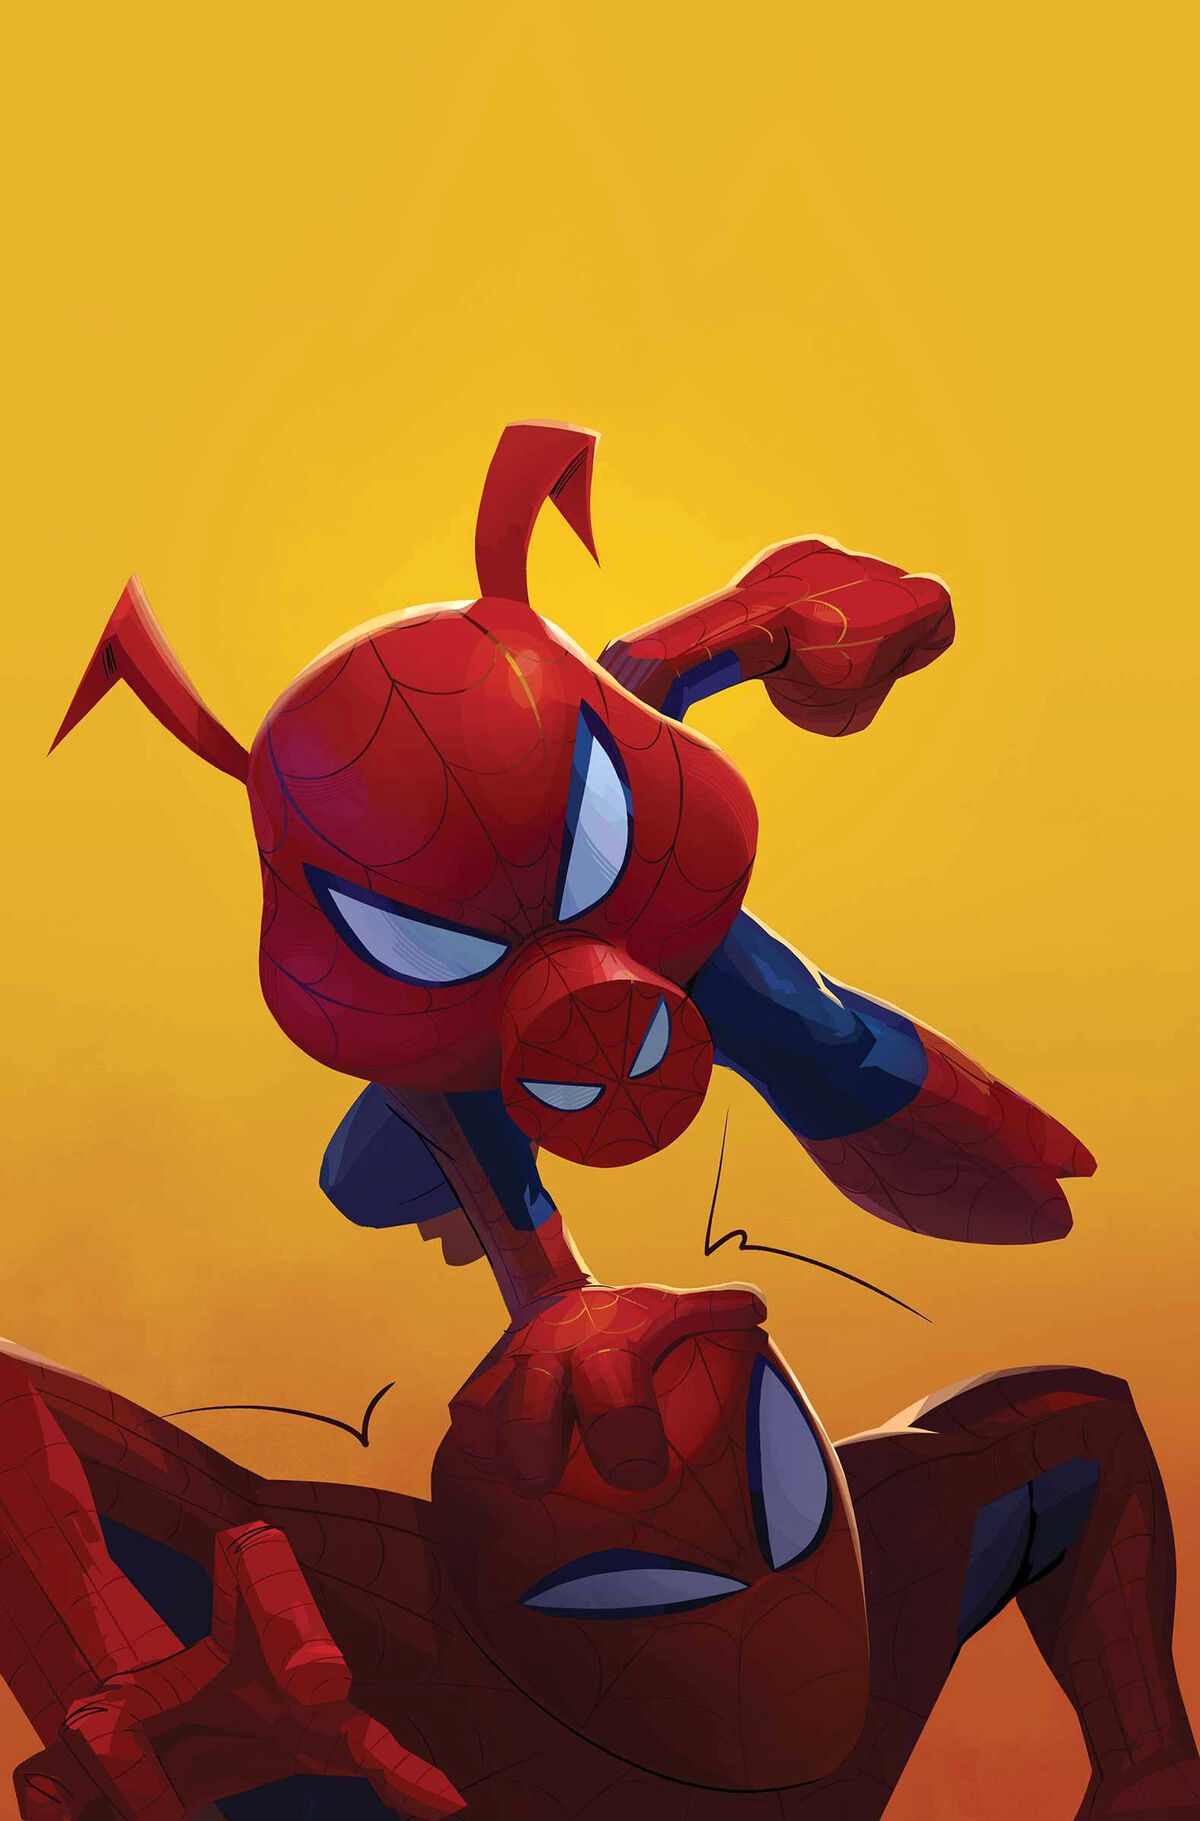 Marvel's 'Spider-man: Across the Spider-Verse' revolutionizes the